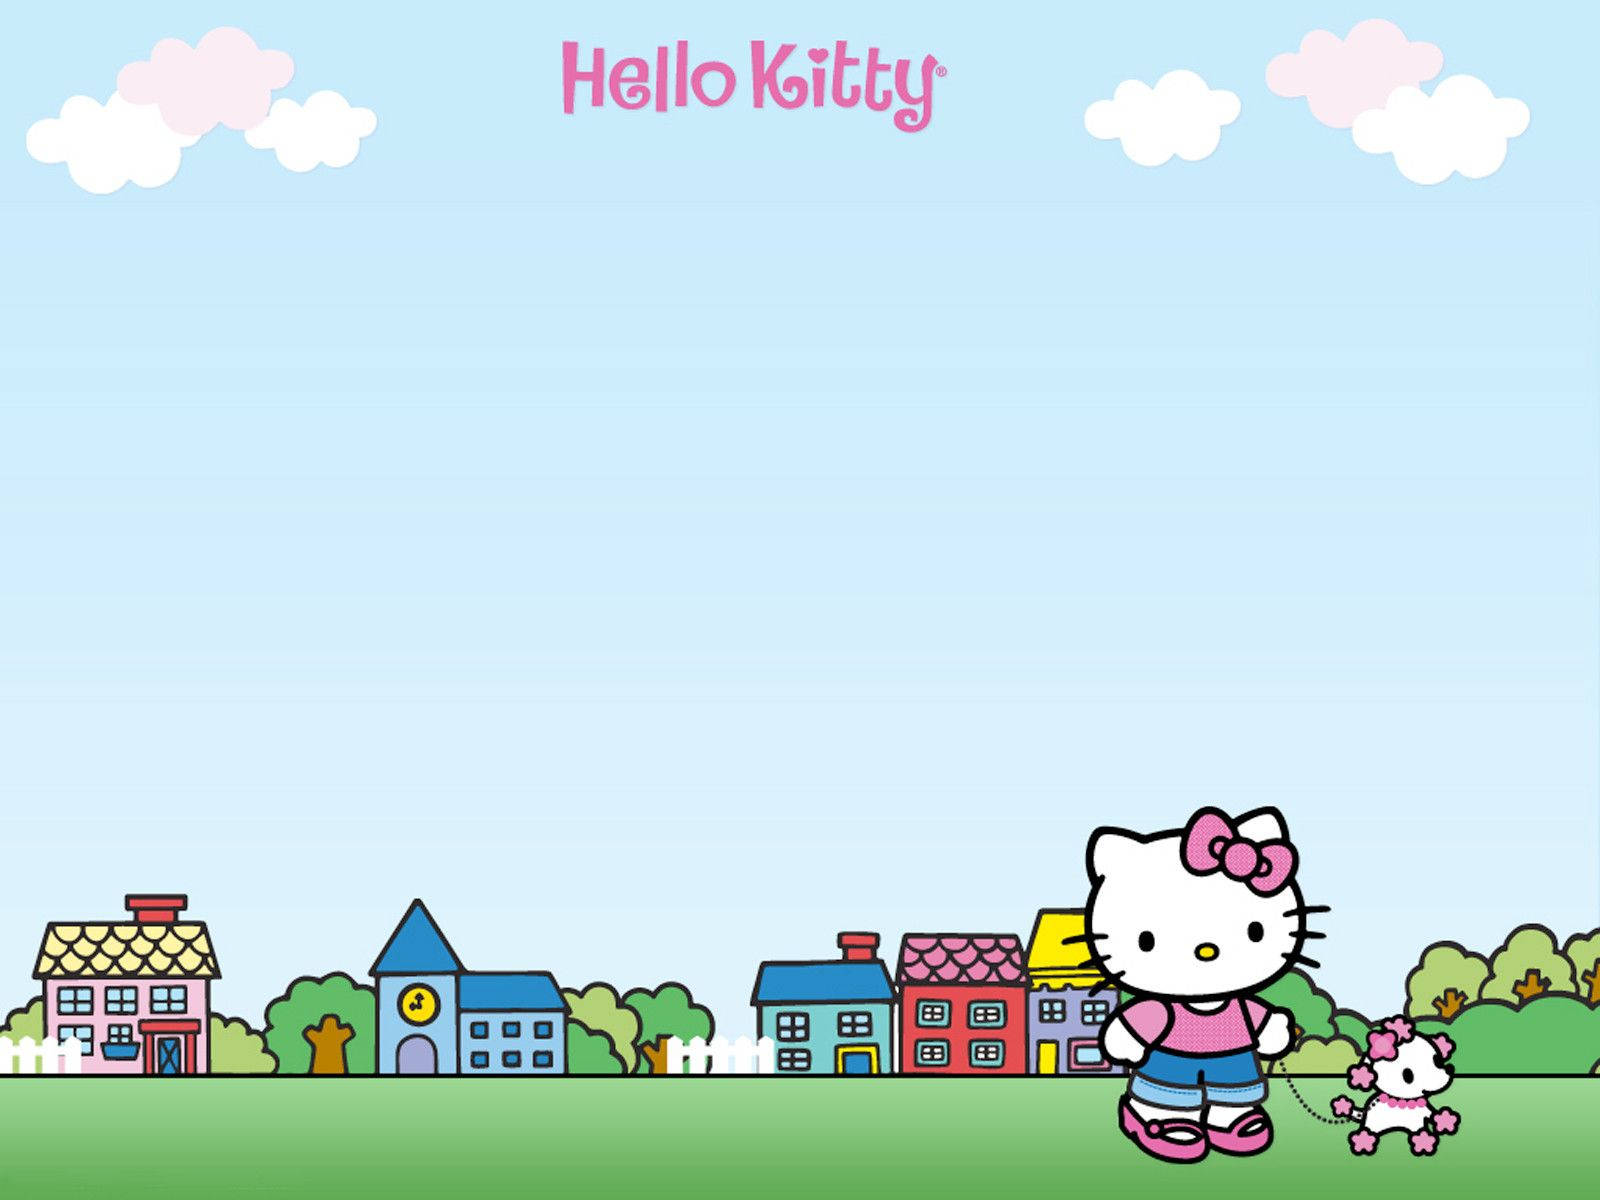 Nyd et sjovt tidspunkt med Hello Kitty i Sanrio-landsbyen. Wallpaper